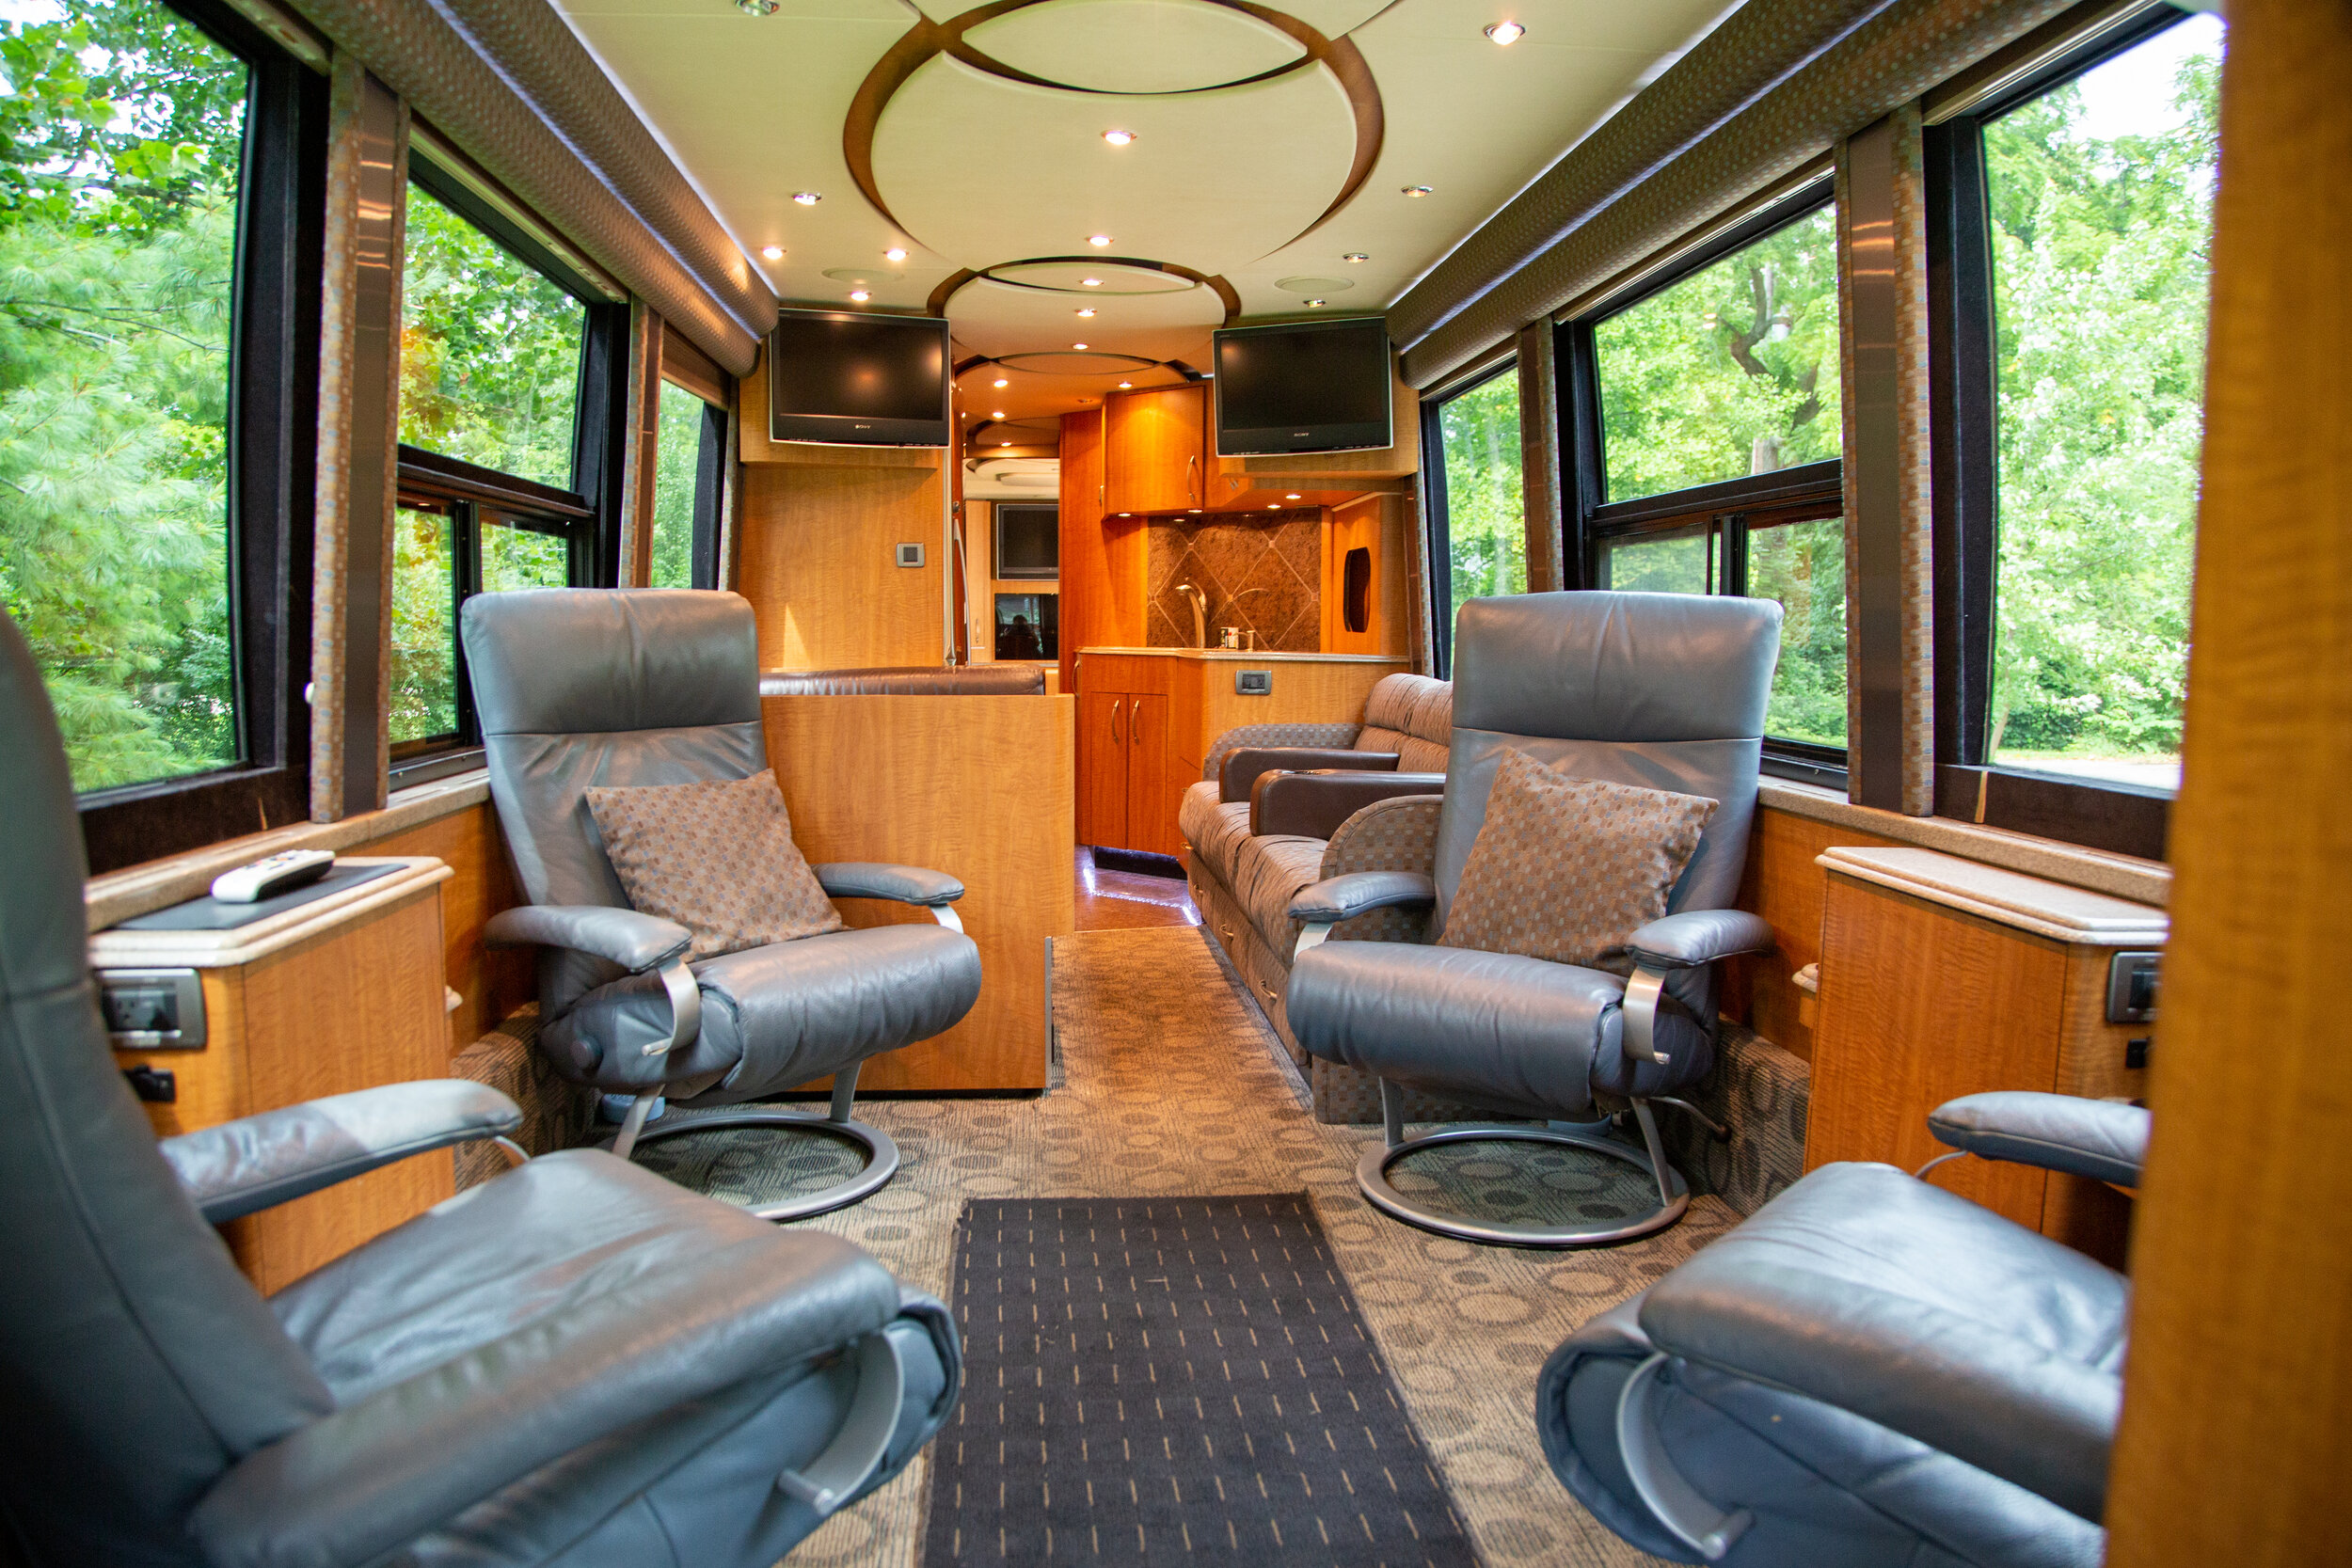 Luxury Charter Bus Rental — Coach Quarters